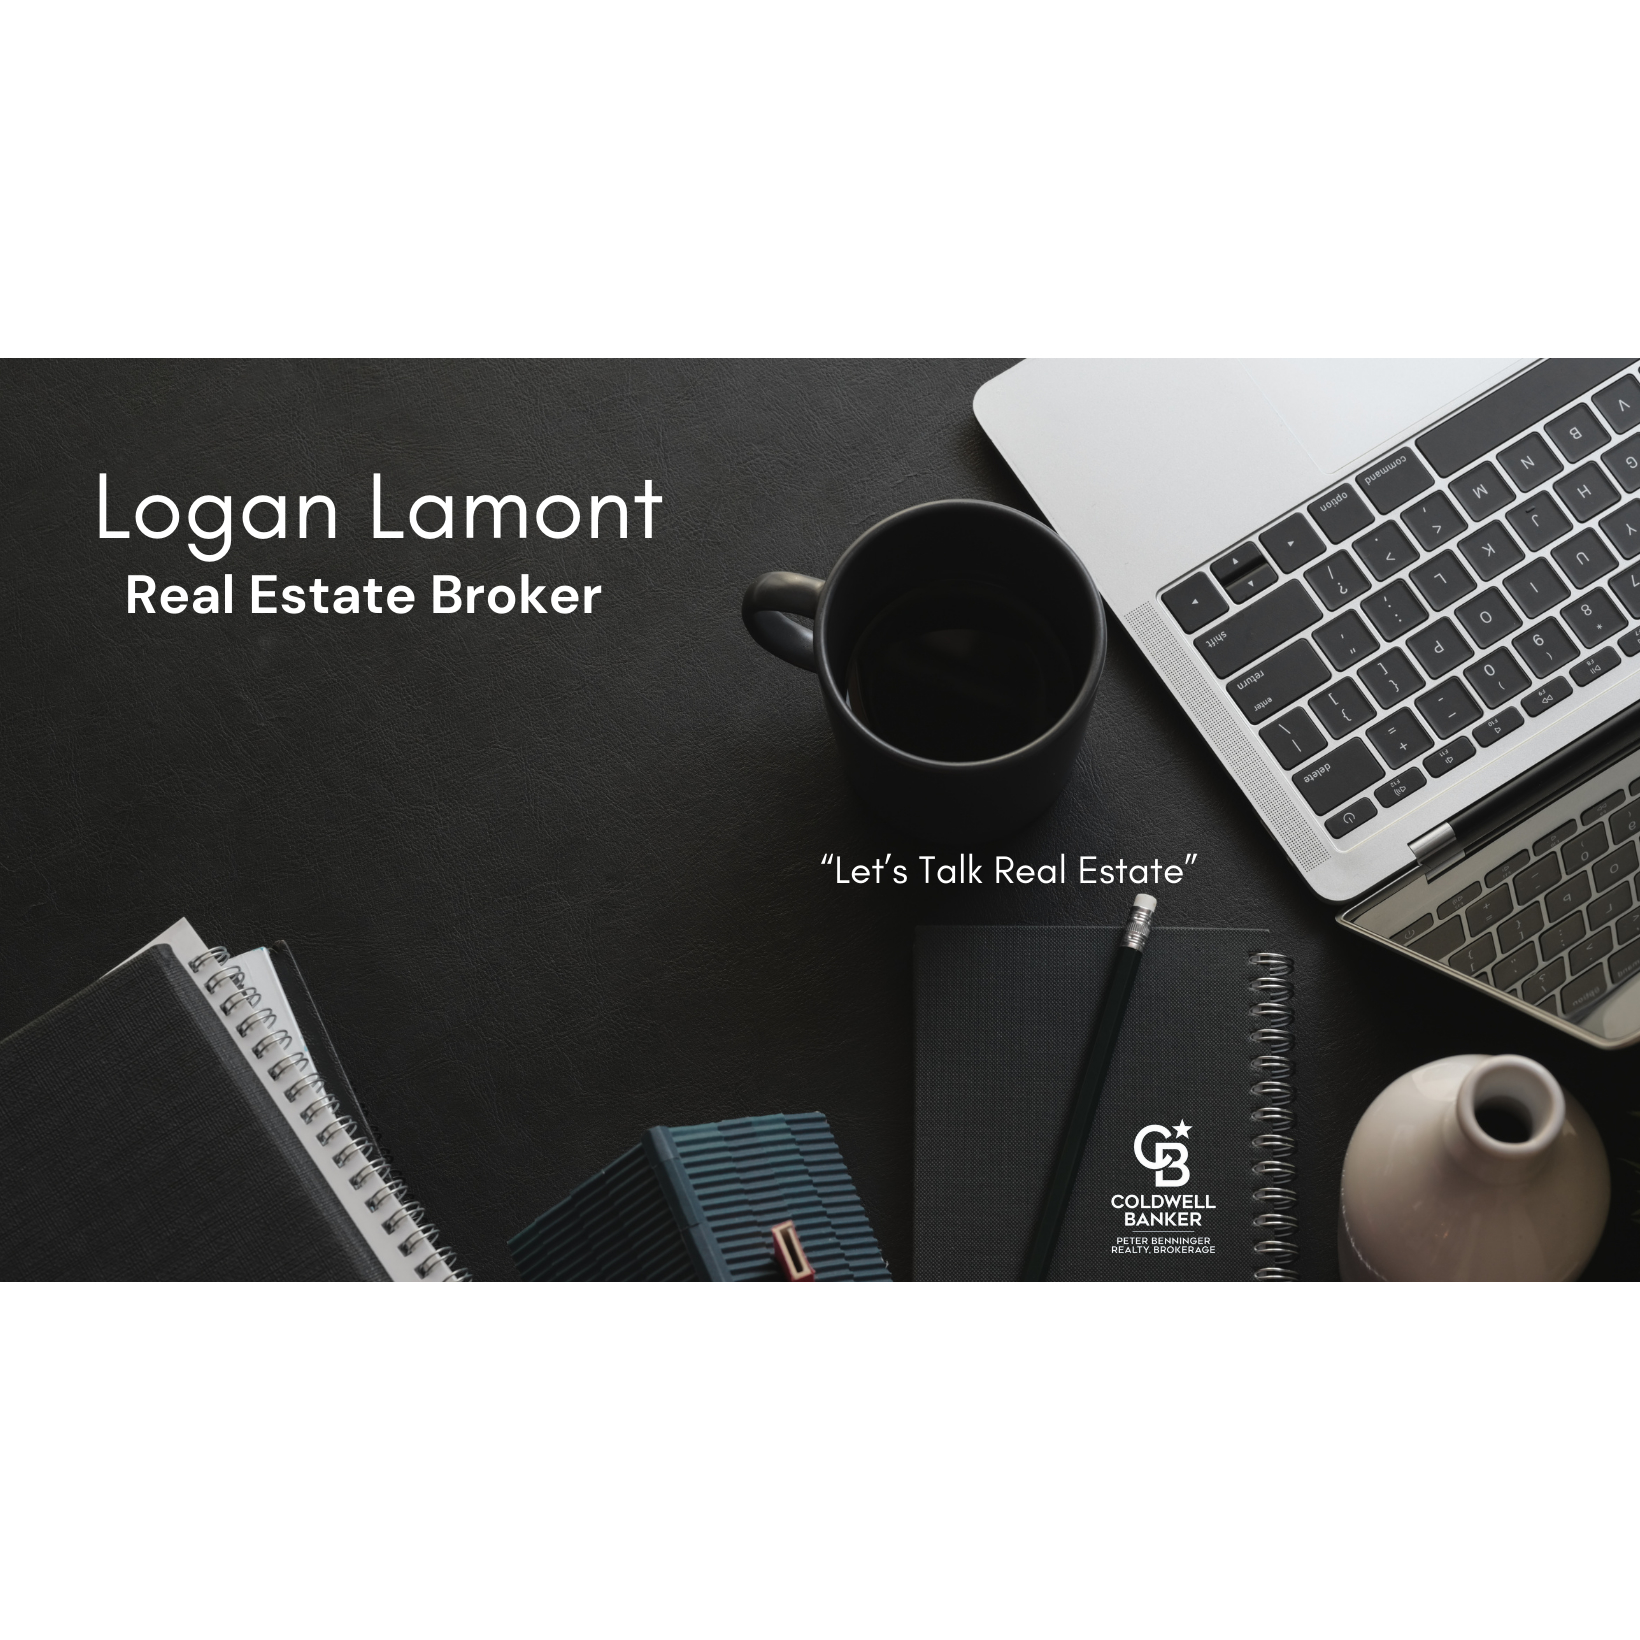 Logan Lamont Realtor - Real Estate Agents & Brokers